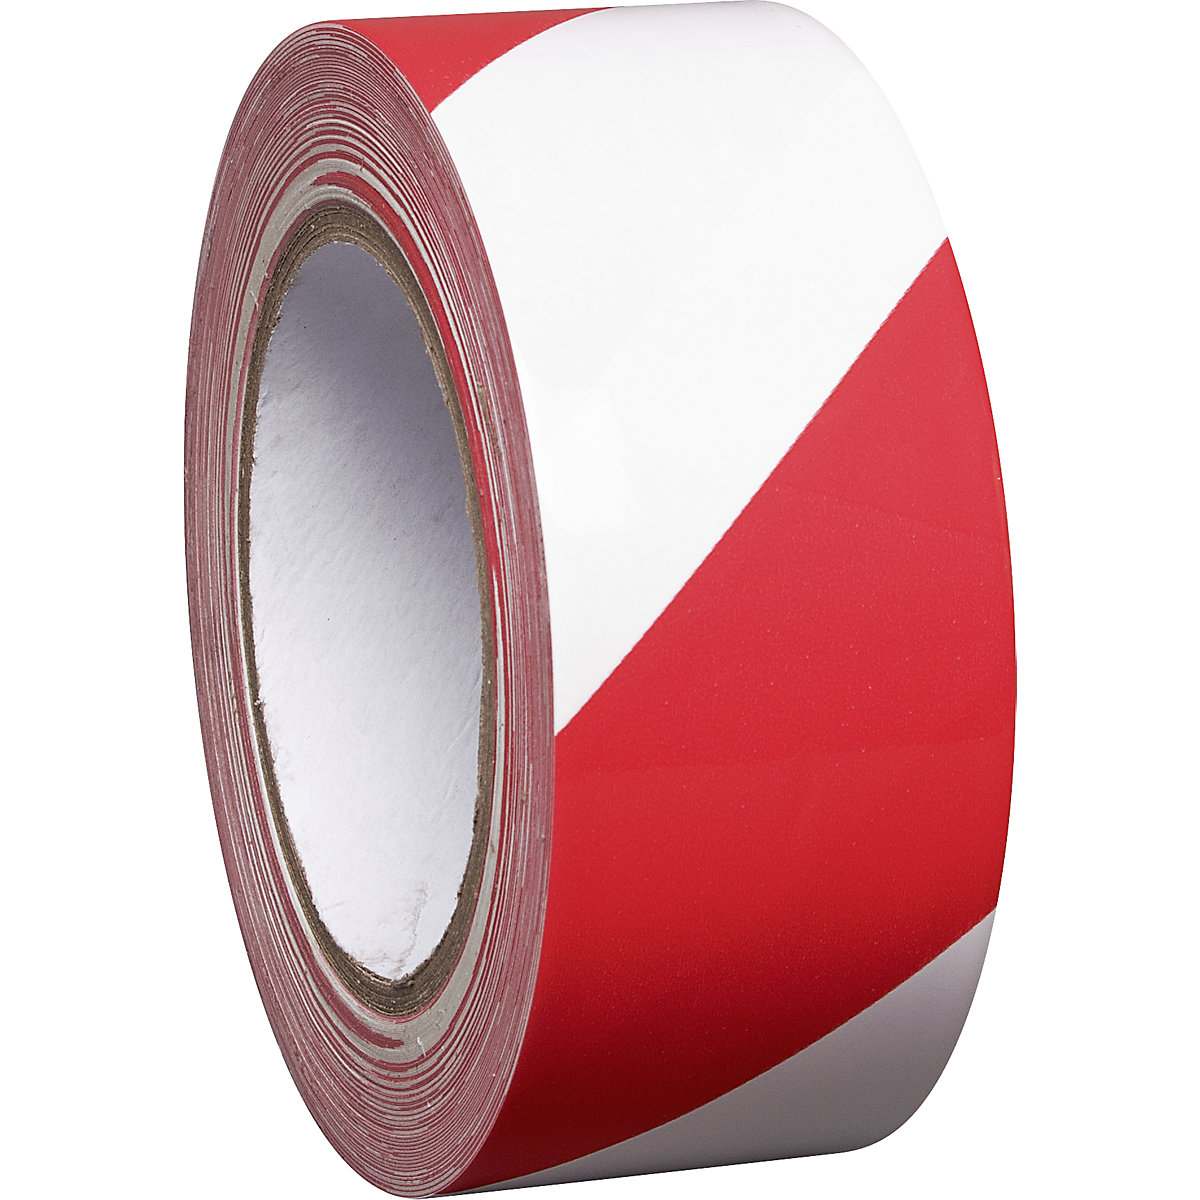 Podlahový značkovací pás z vinylu, dvoubarevný, šířka 50 mm, červená / bílá, bal.j. 8 rolí-3